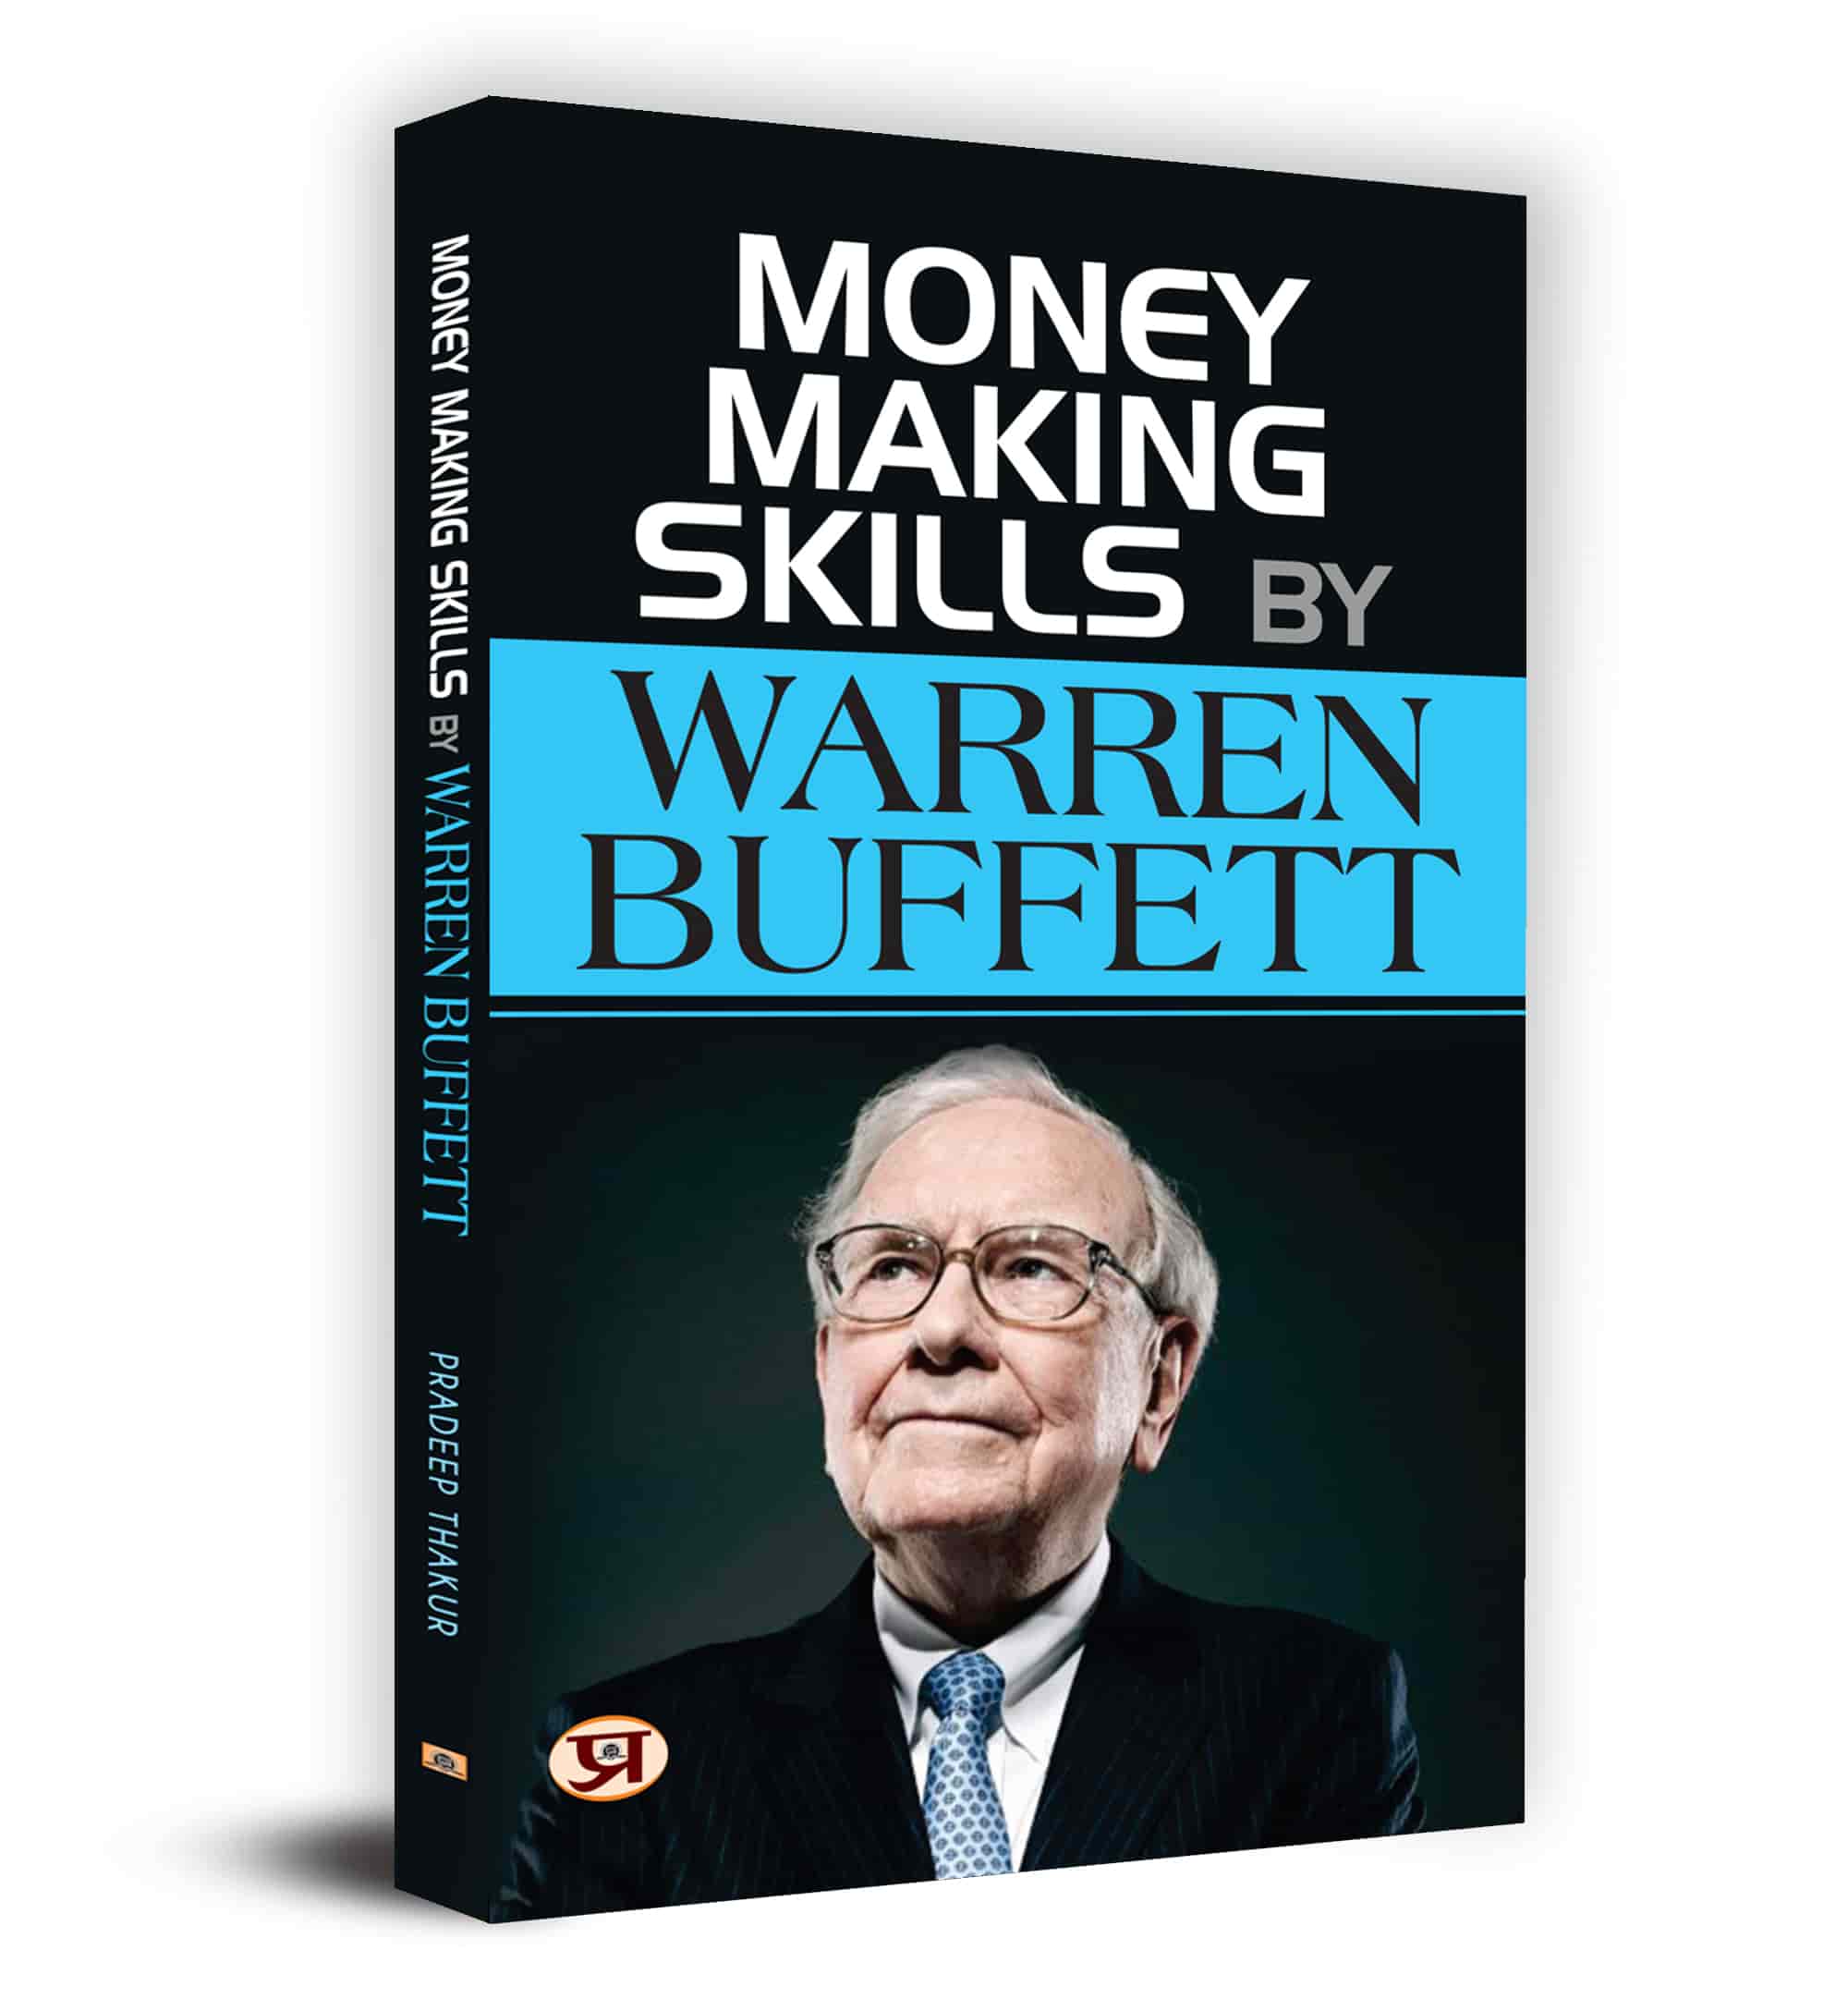 Money Making Skills by Warren Buffet: A Guide to Building Wealth (Warren Buffett Investment Strategy Book)